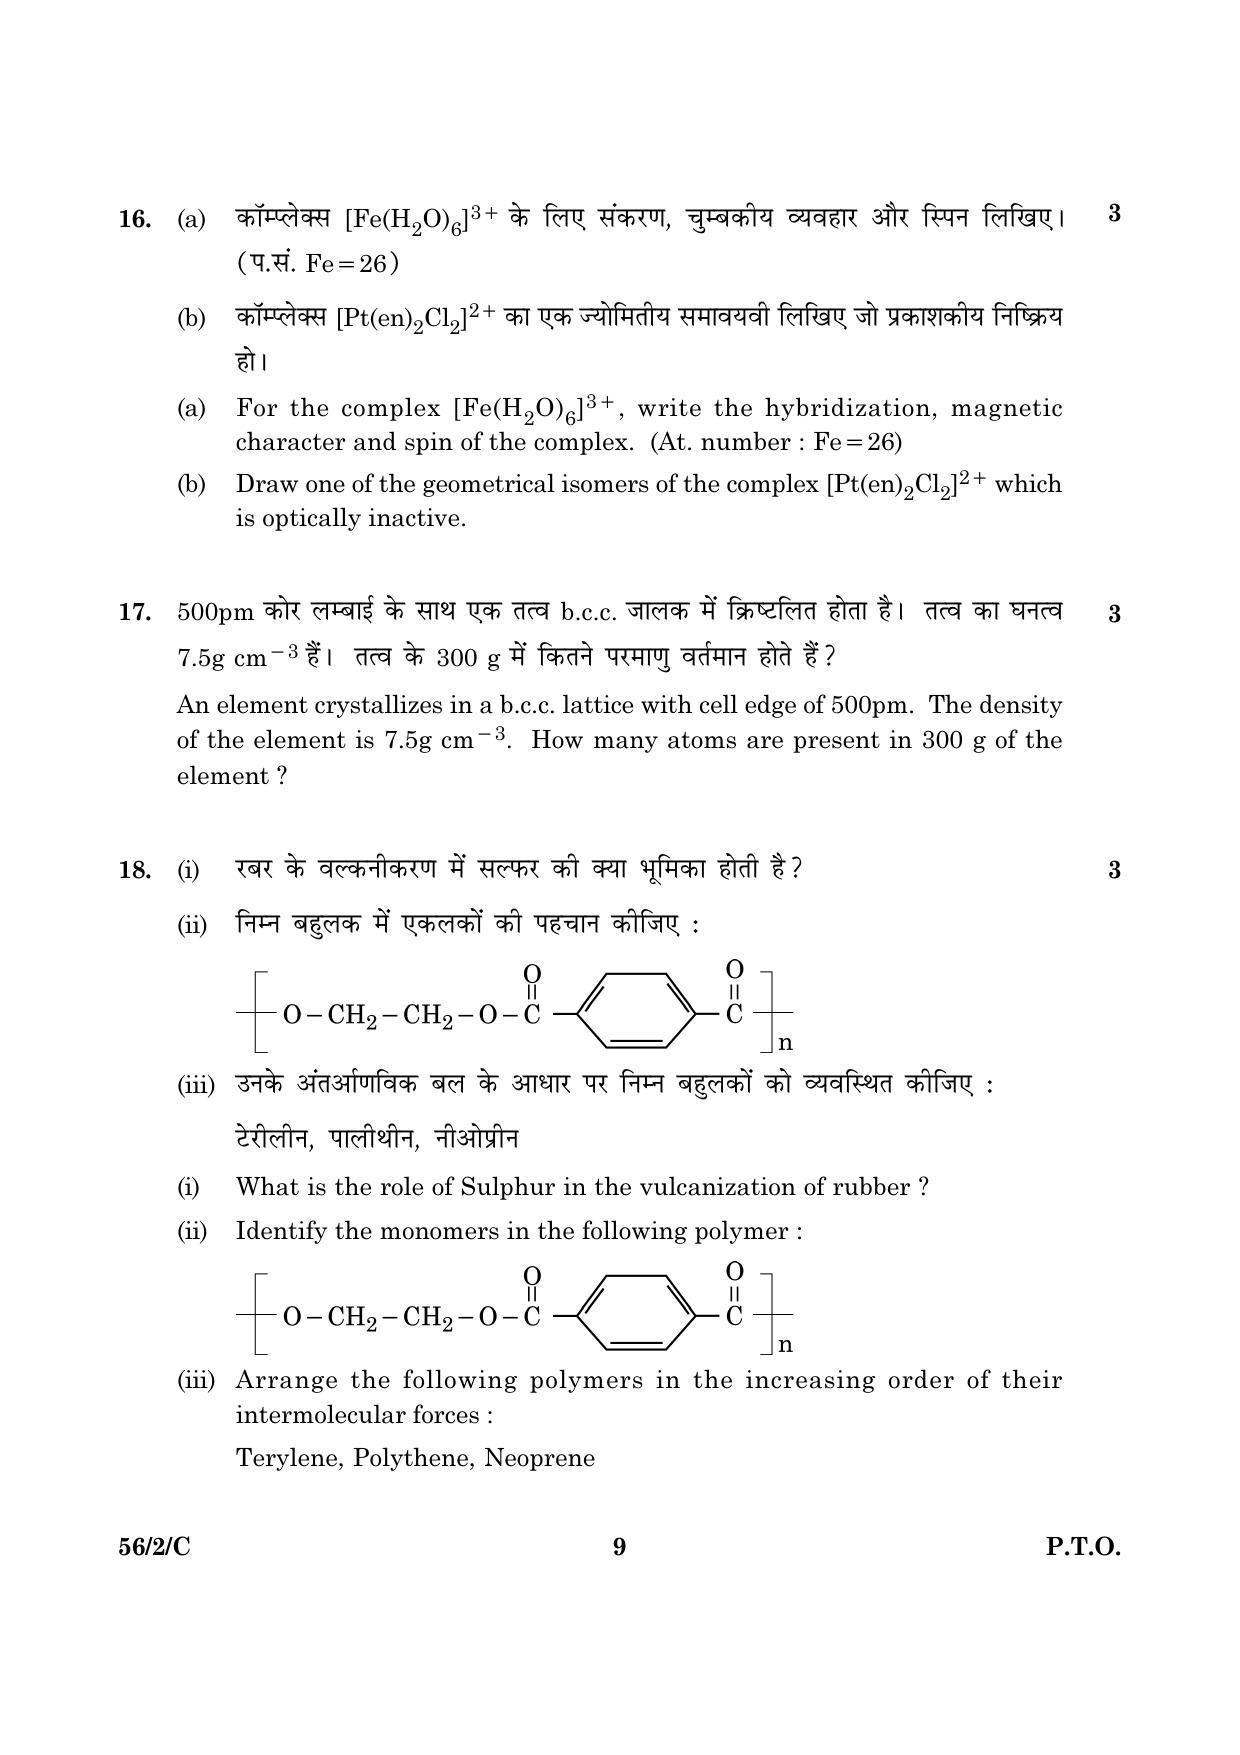 CBSE Class 12 056 Set 2 C Chemistry 2016 Question Paper - Page 9